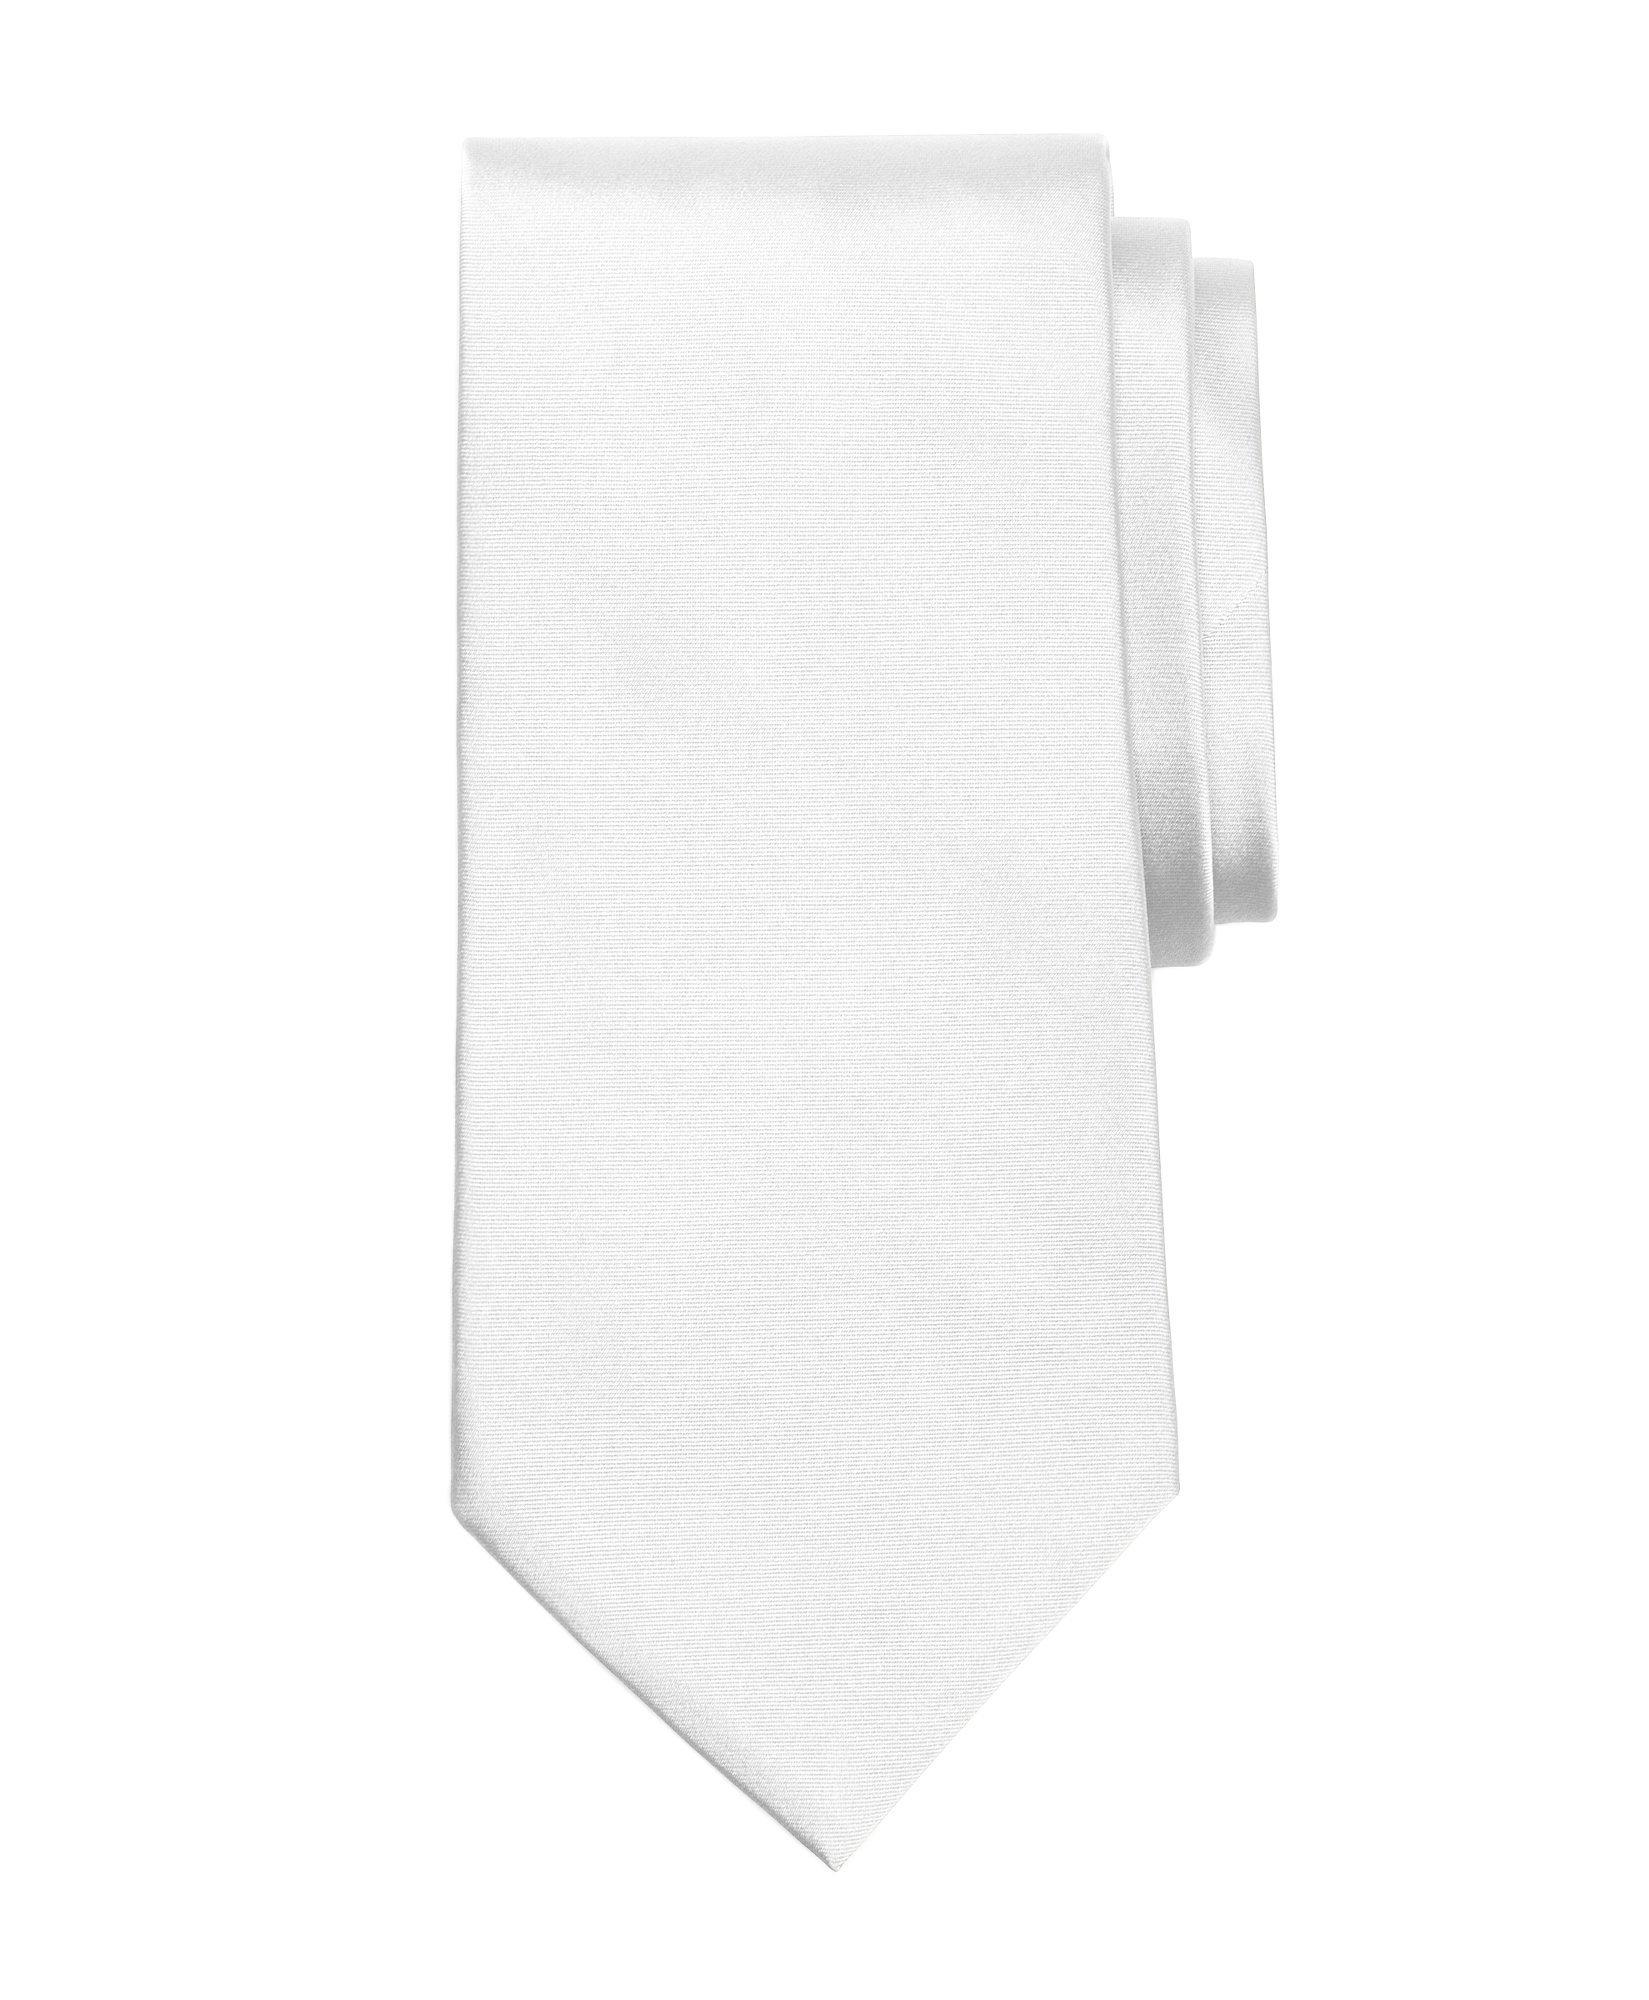 Golden Fleece® 7-Fold Satin Tie, image 1